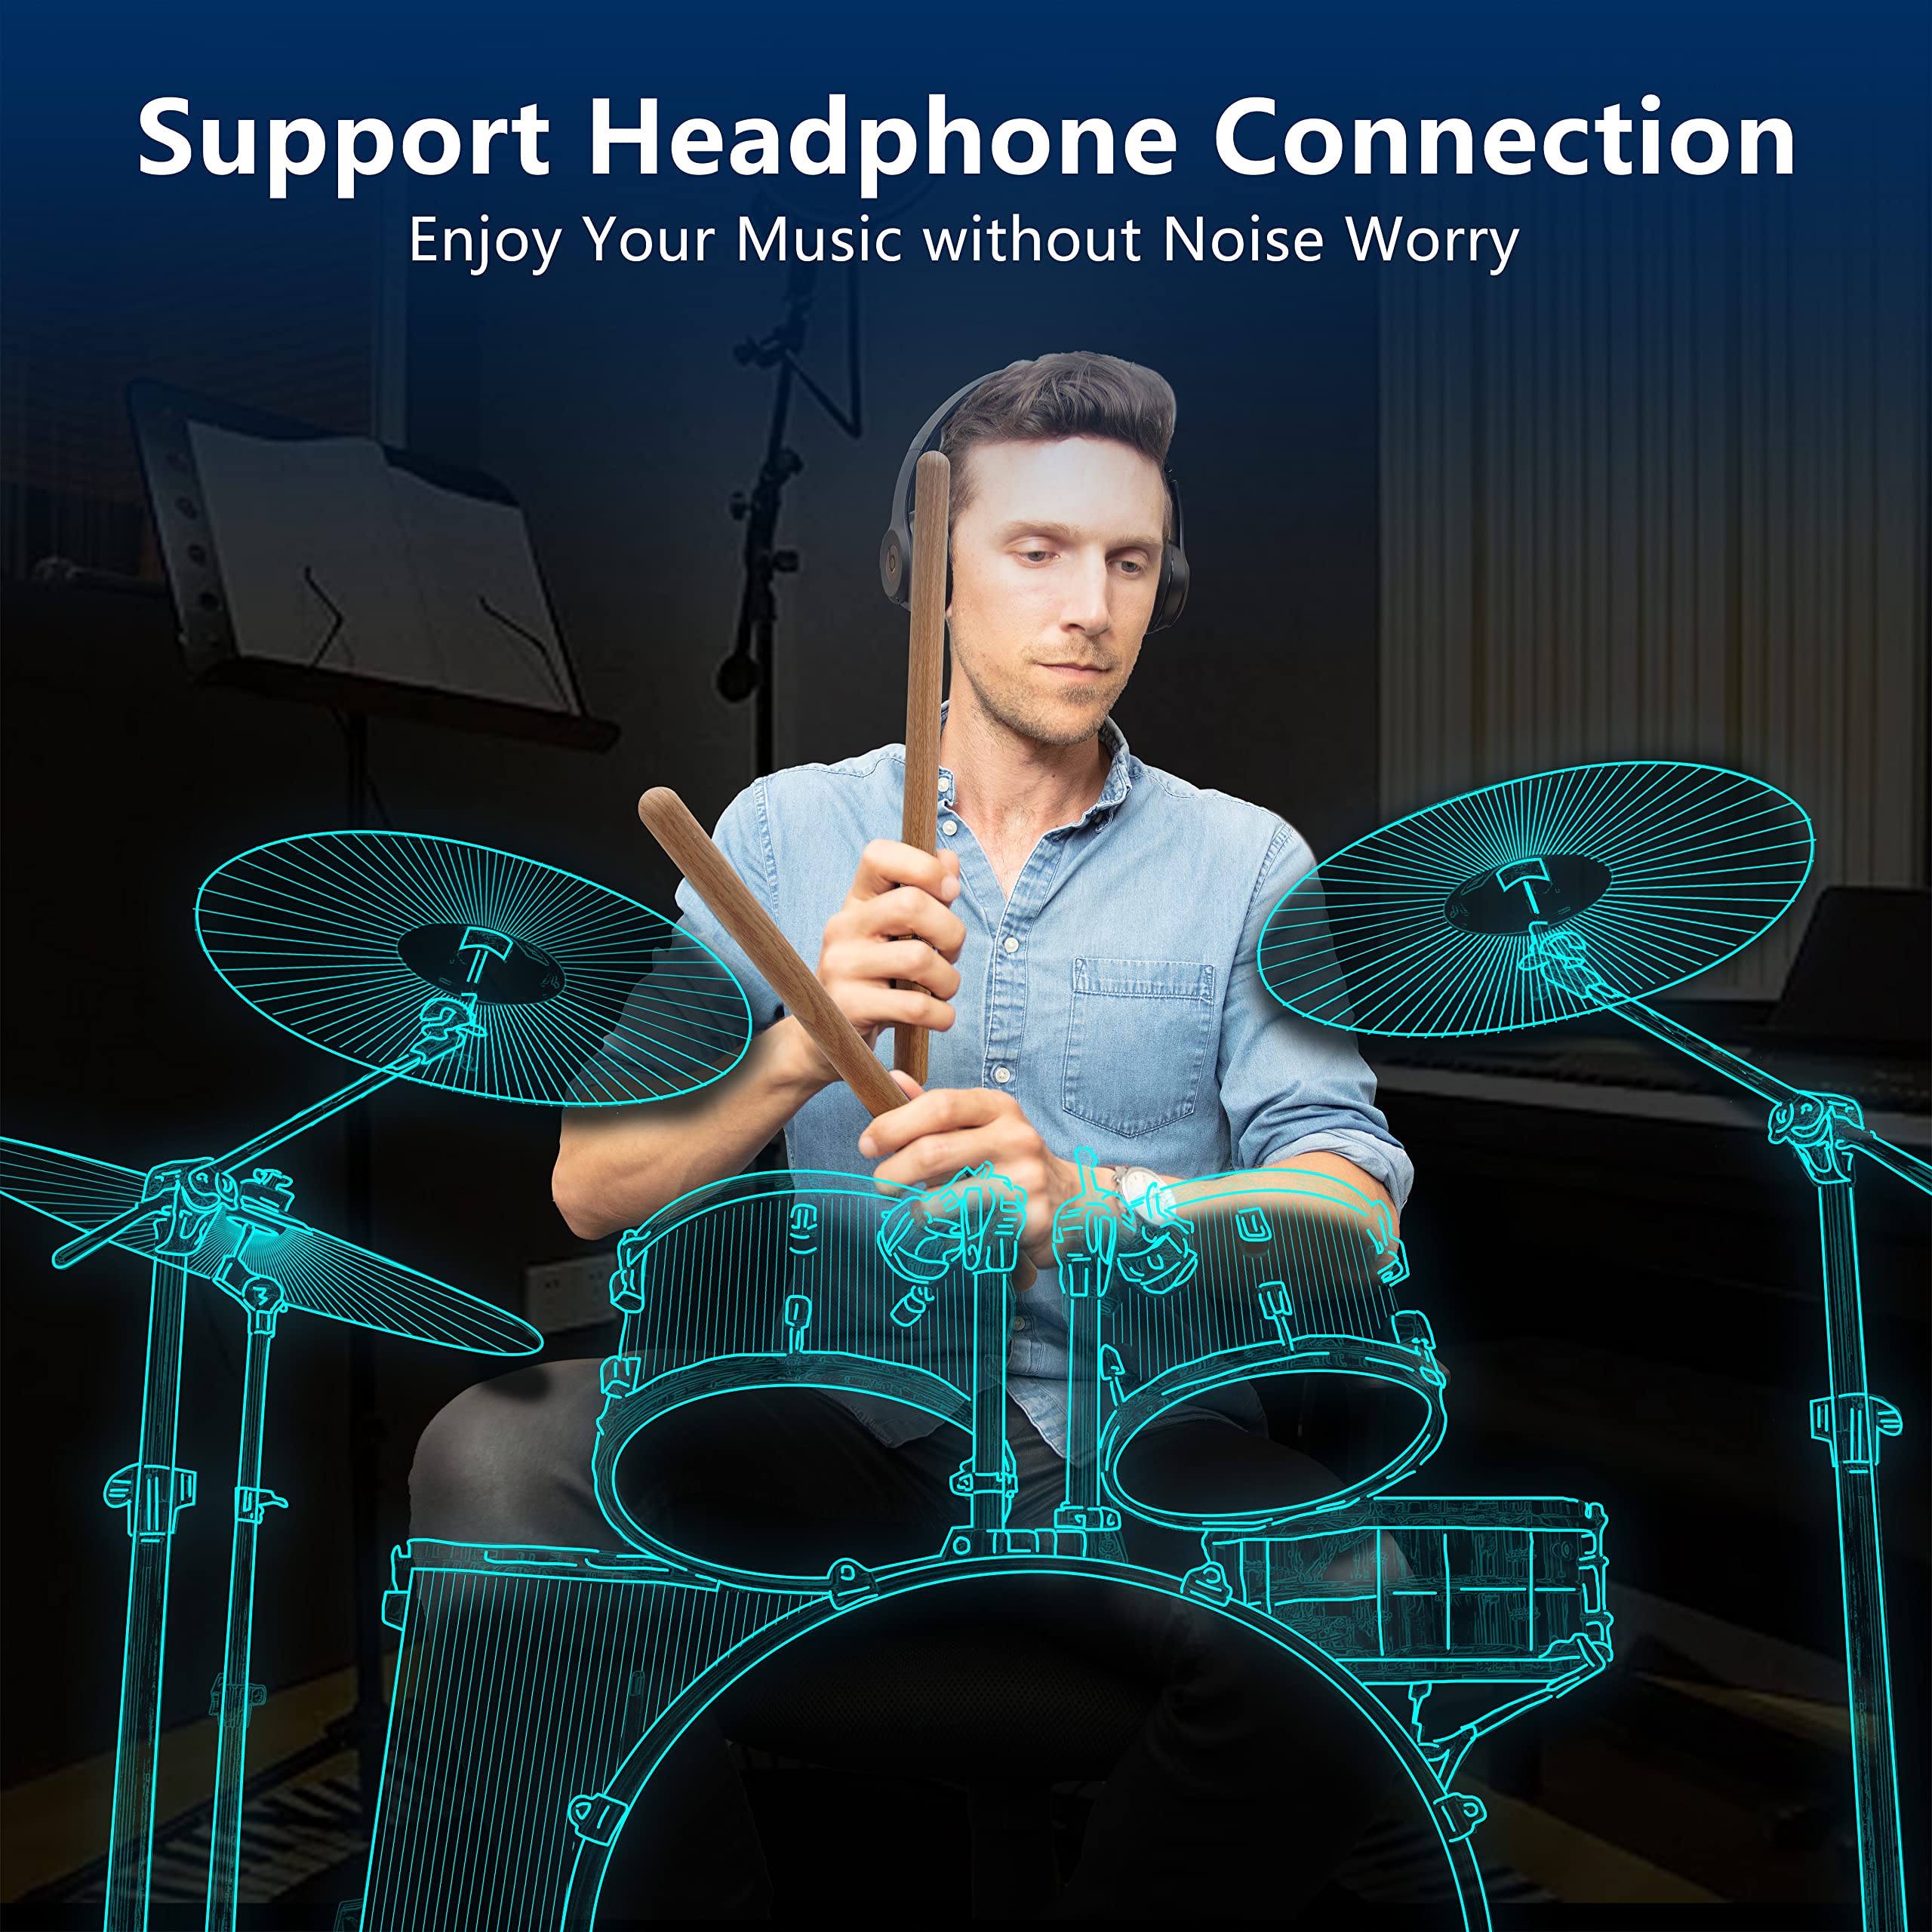 AeroBand BeatMaster AeroDrum 2.0 PLUS: Precision Digital Virtual Drumming Kit Redefined